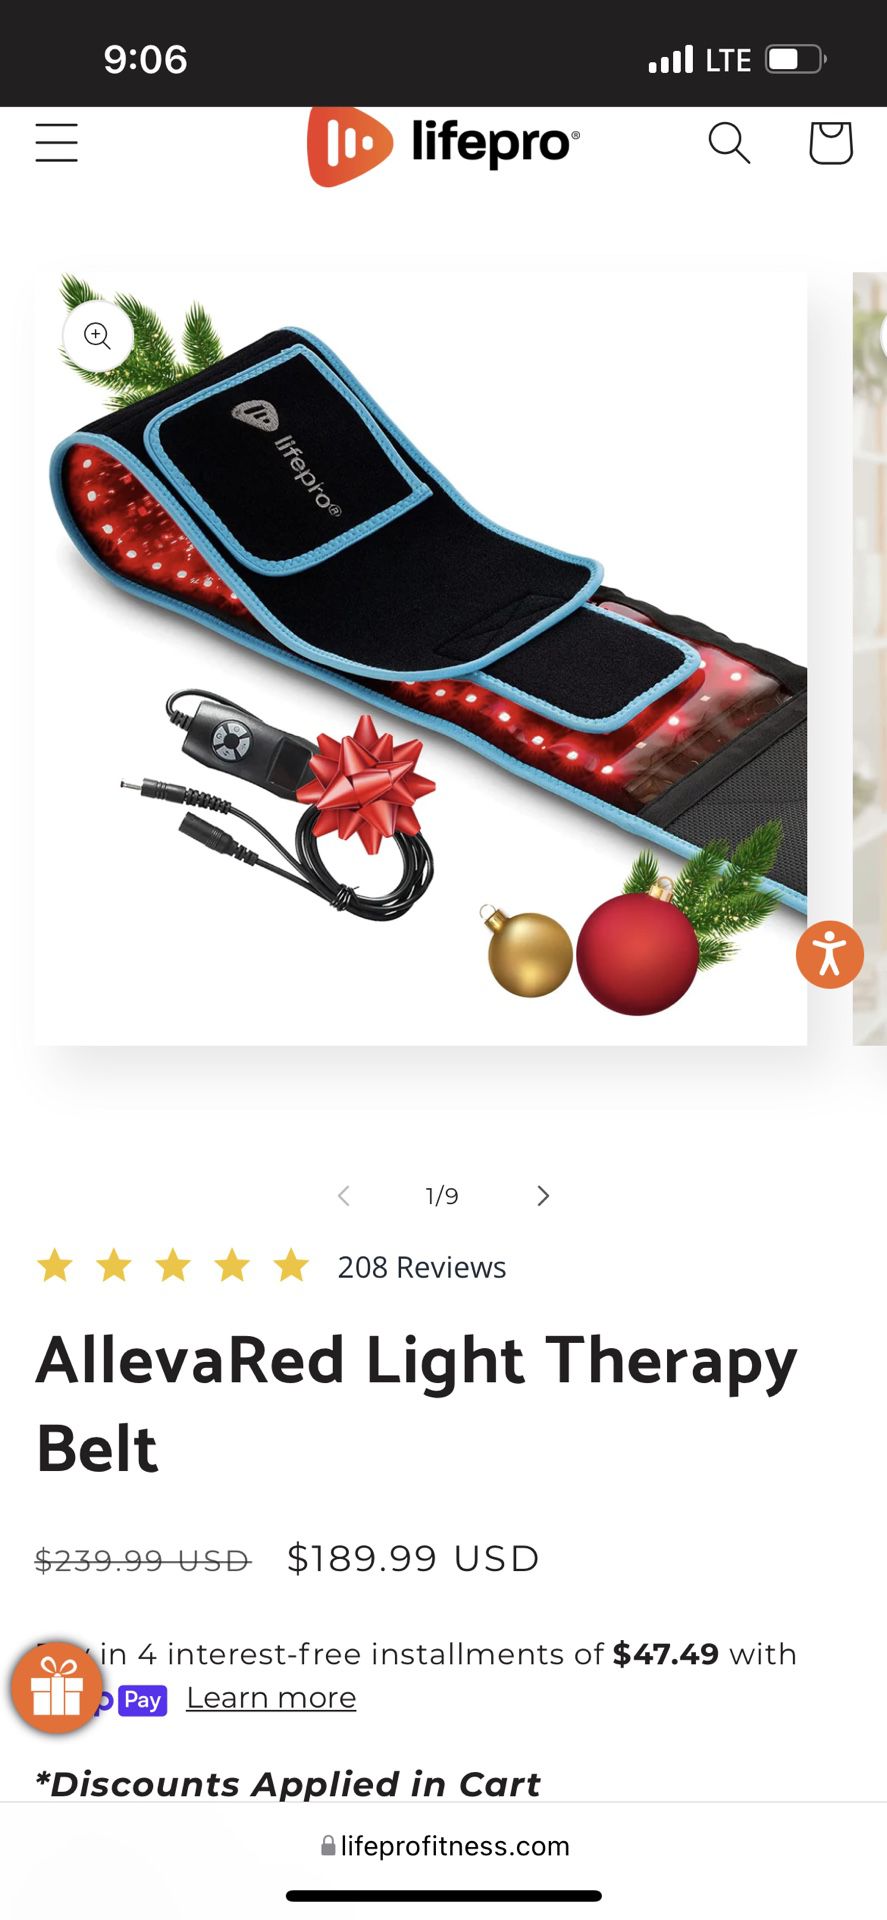 Lifepro Allevared Light Therapy Belt